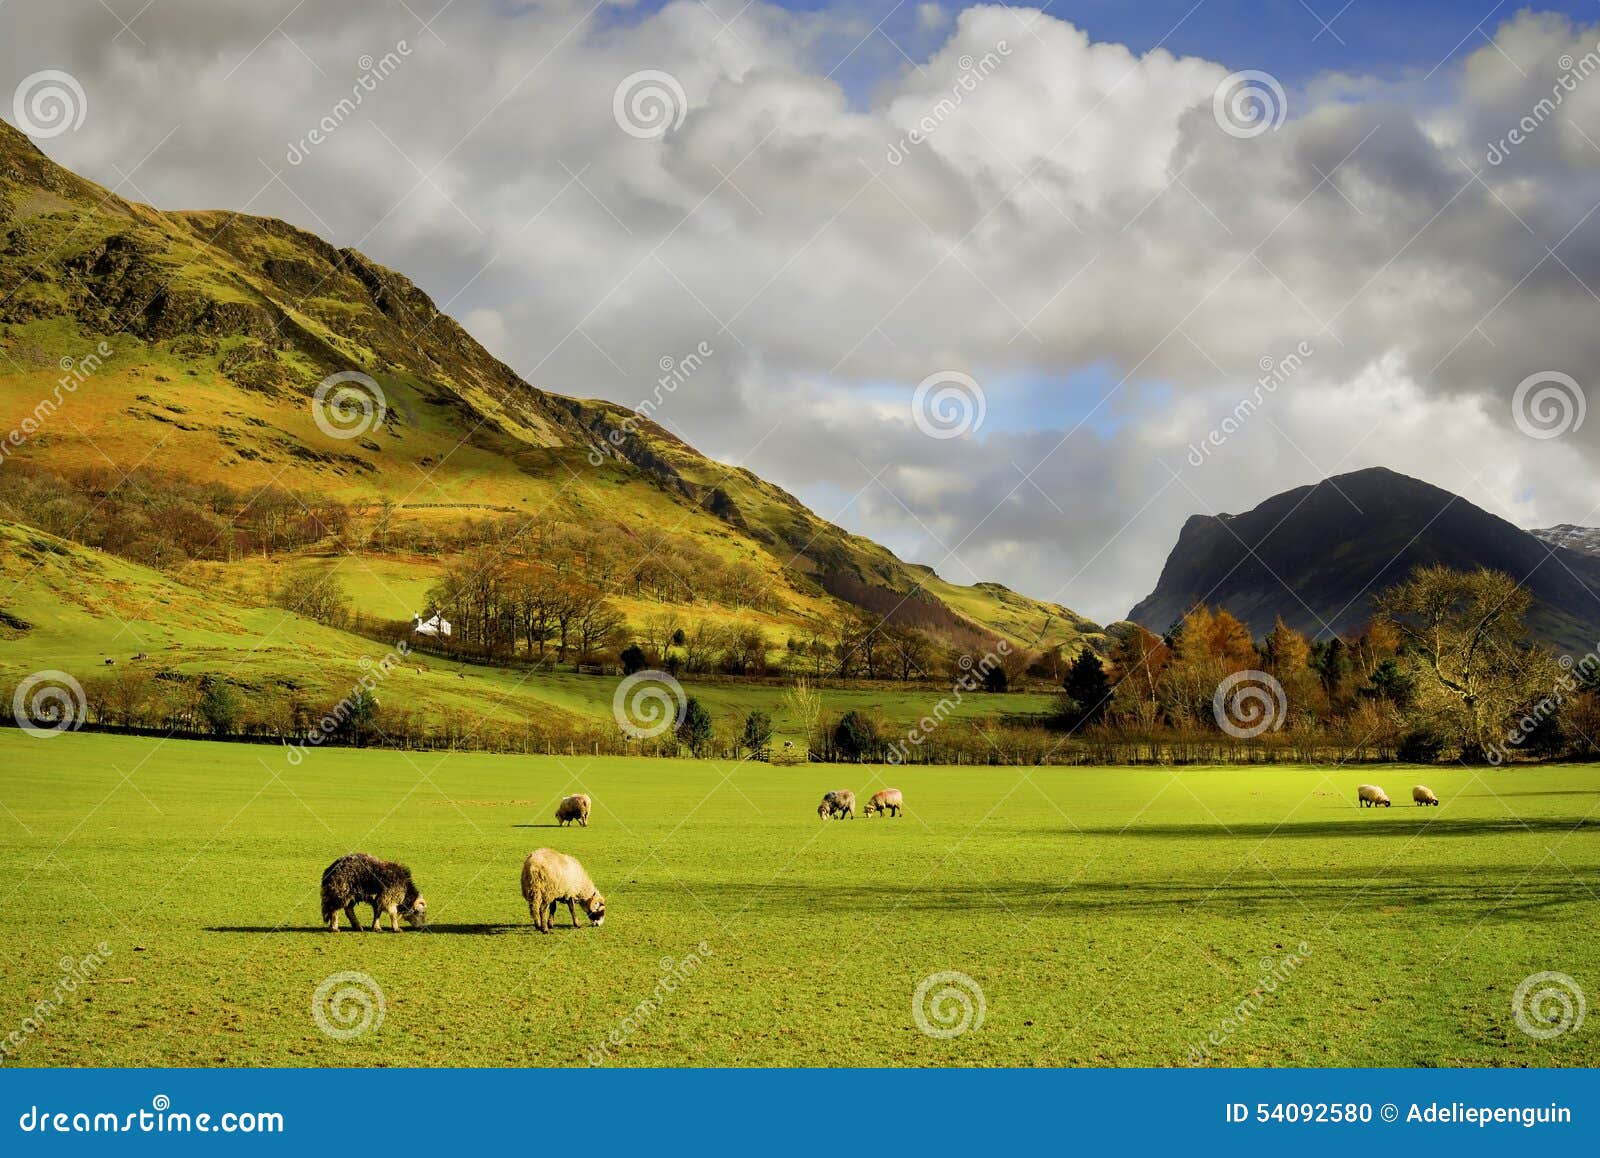 sheep grazing, english countryside, lake district